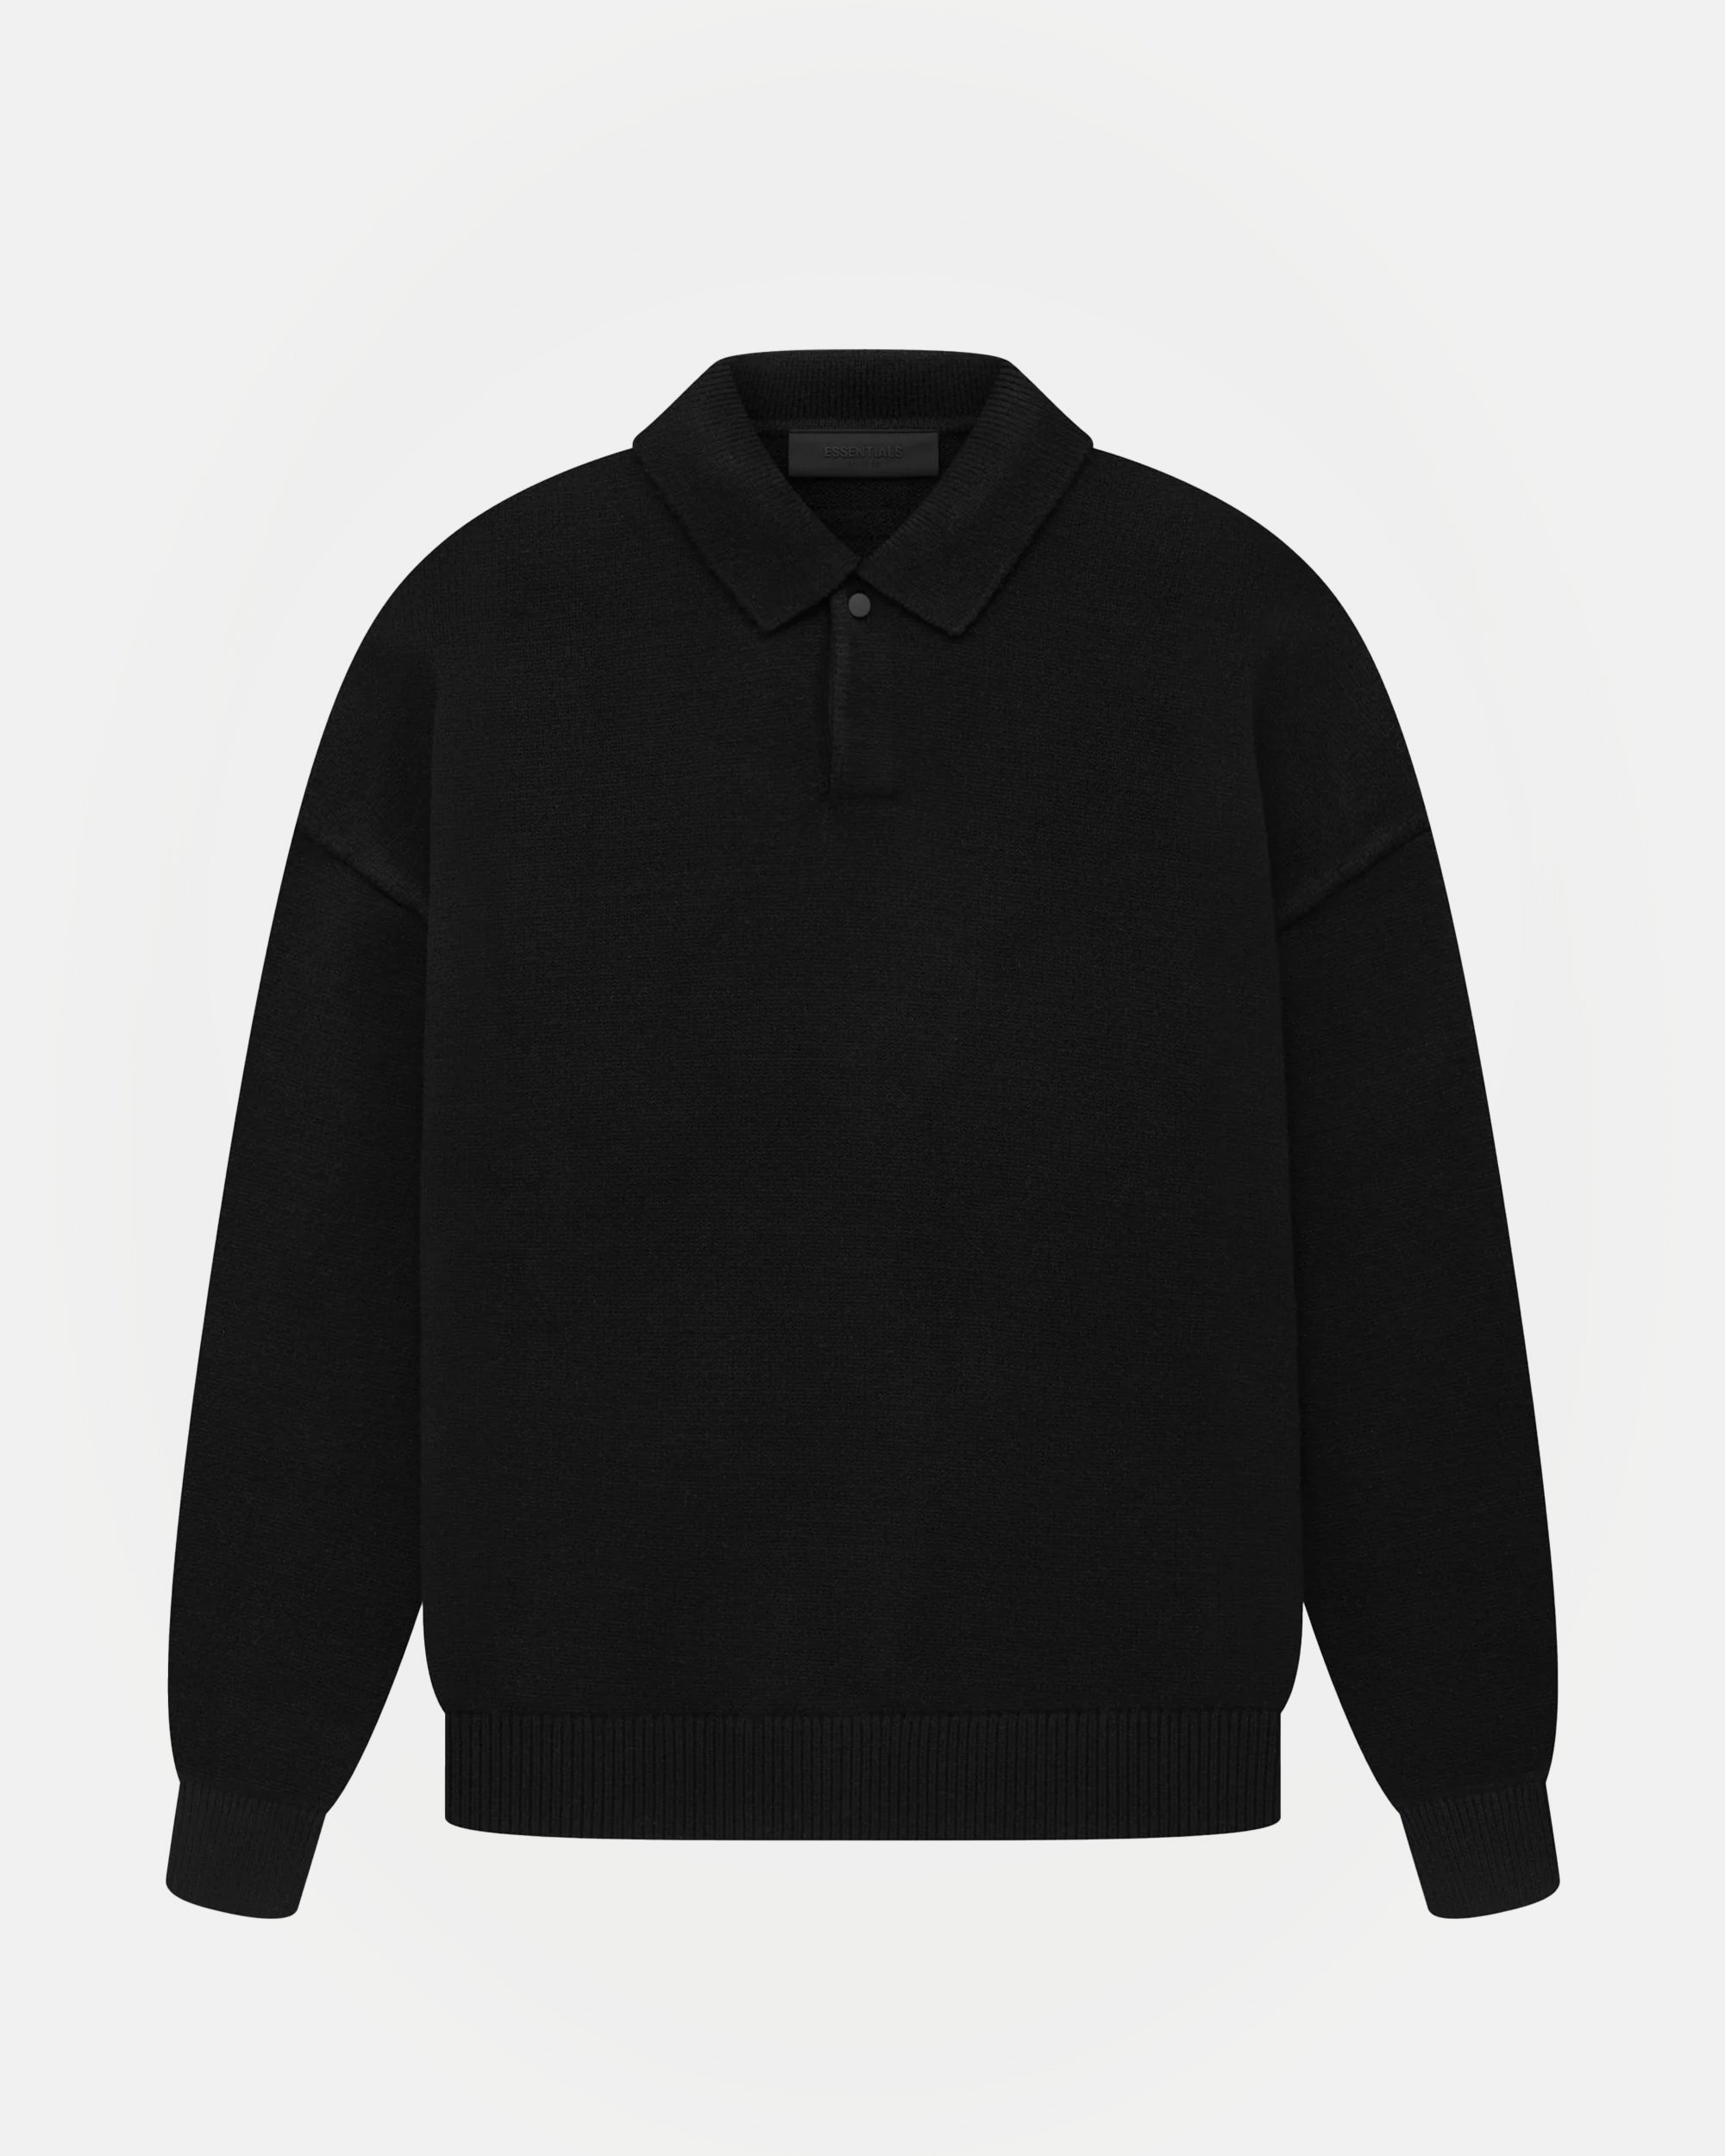 Essentials Knit Polo in Black